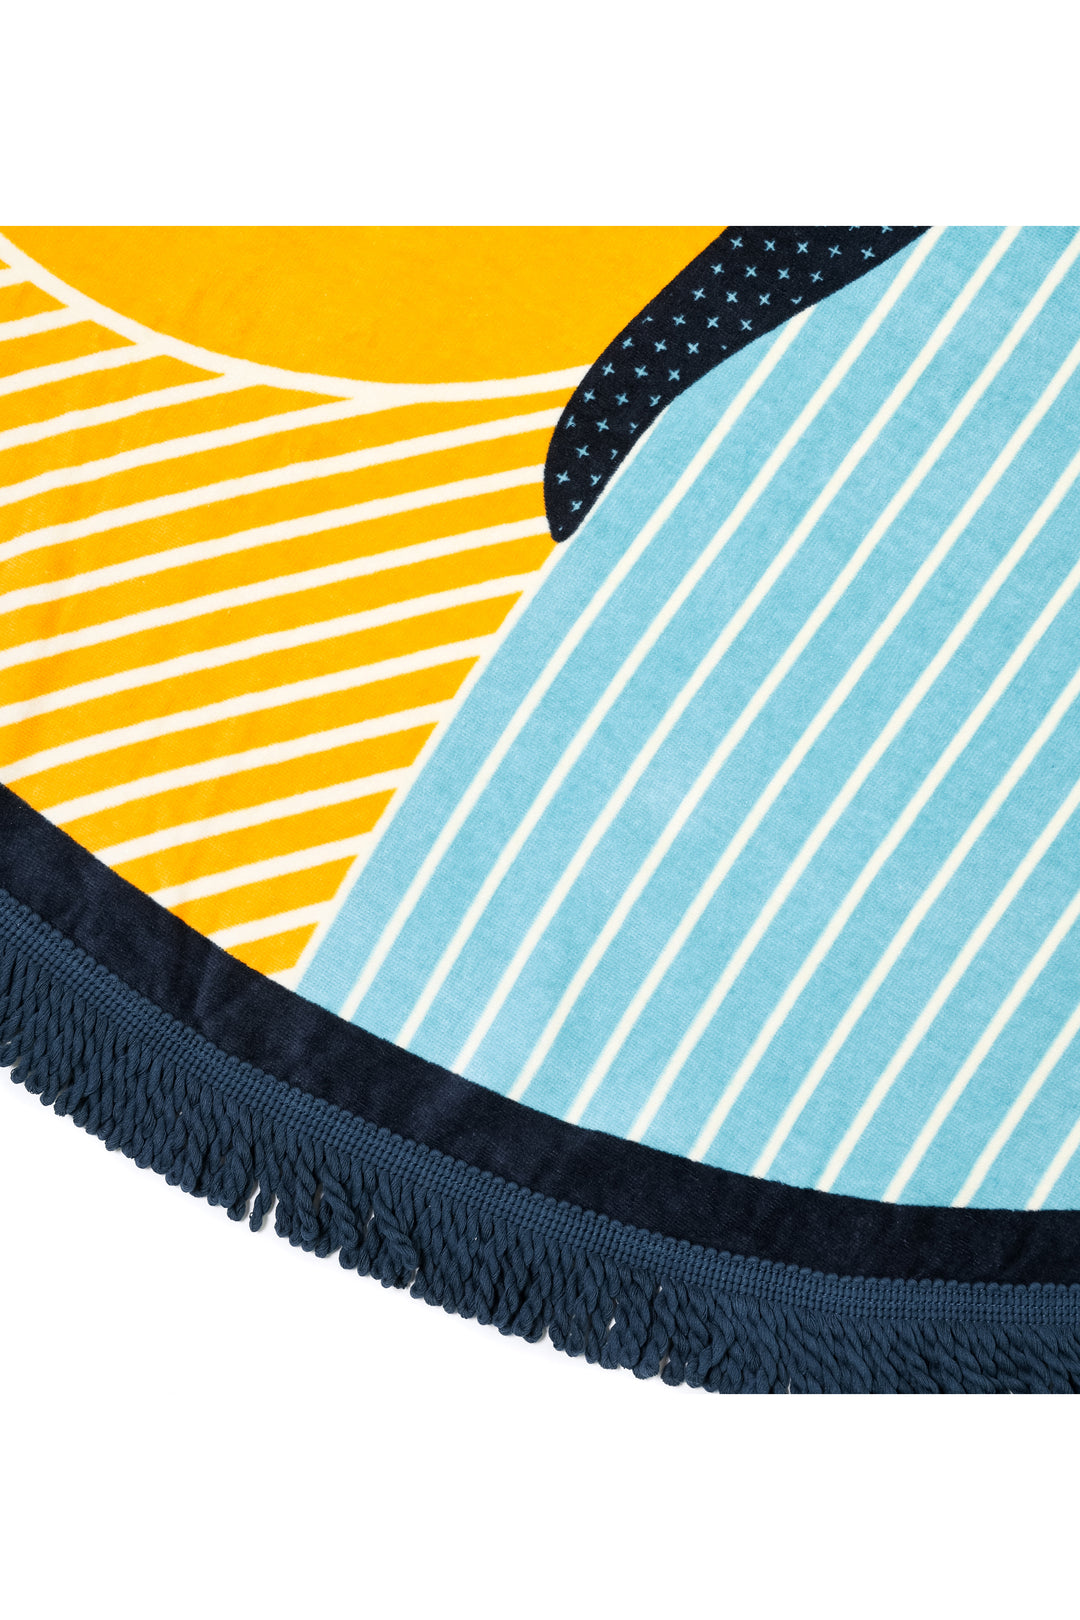 THE SEASIDE | Velour Round Towel